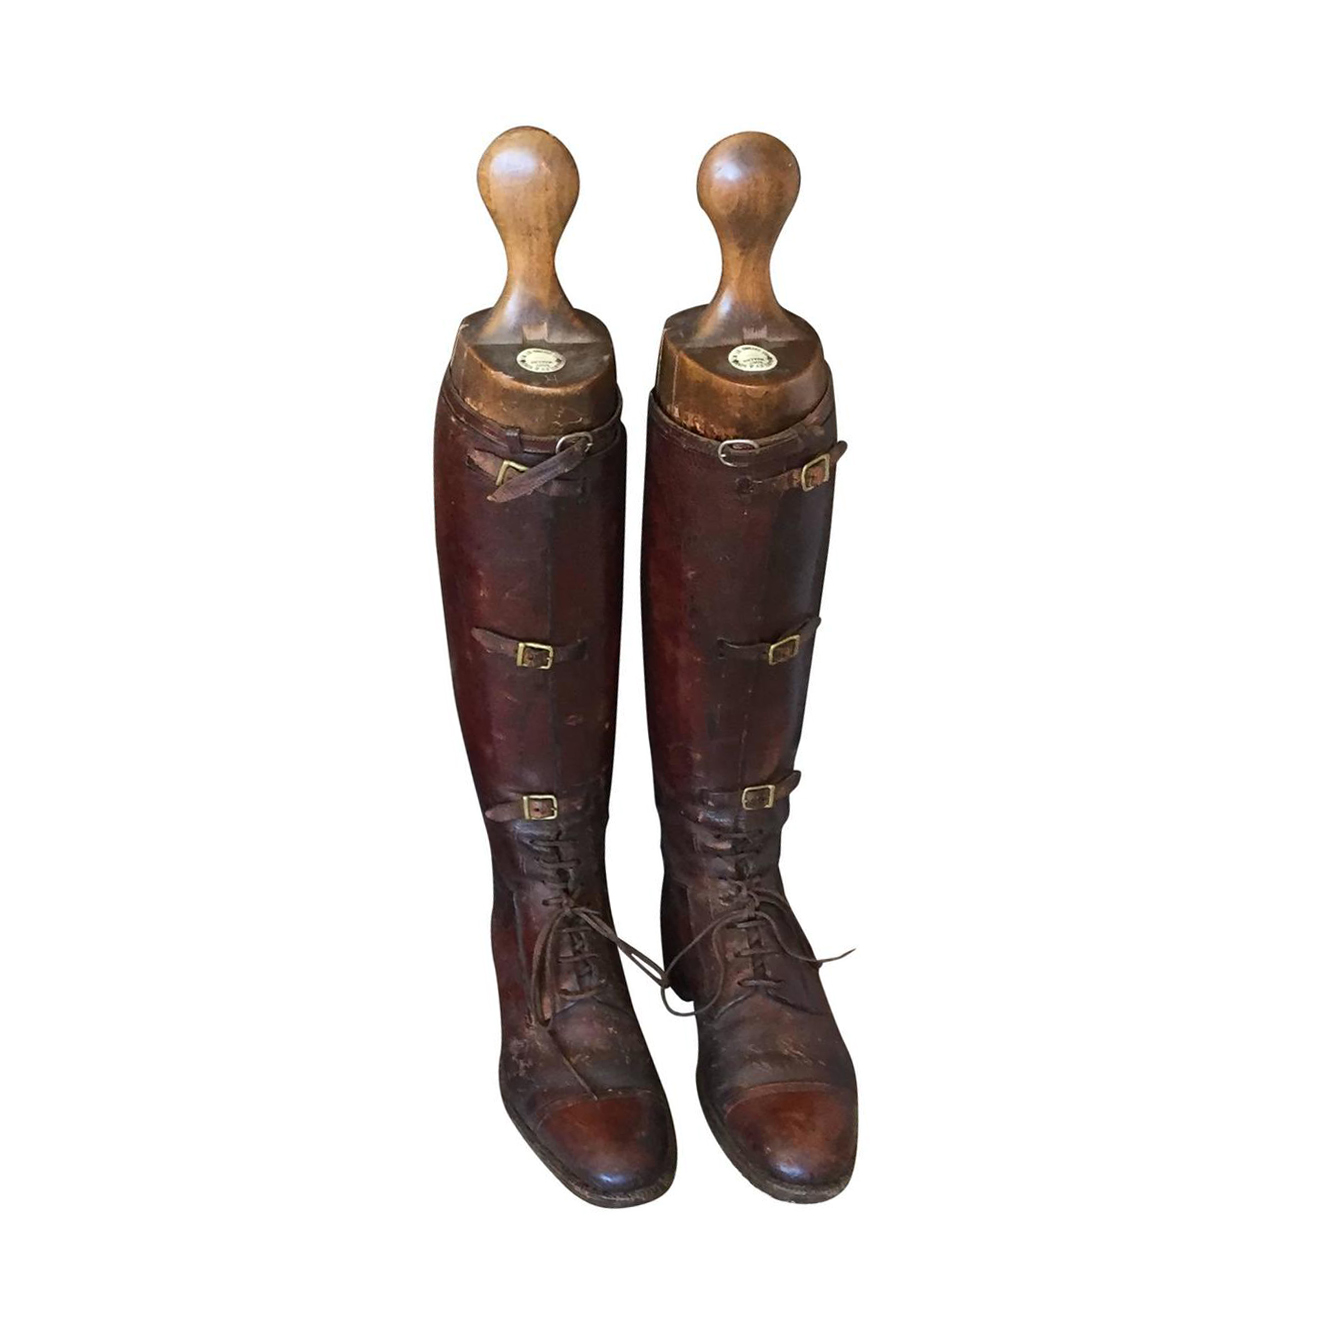 Boot Pair - Wood Inserts Inside | ÆRENA Galleries & Gardens